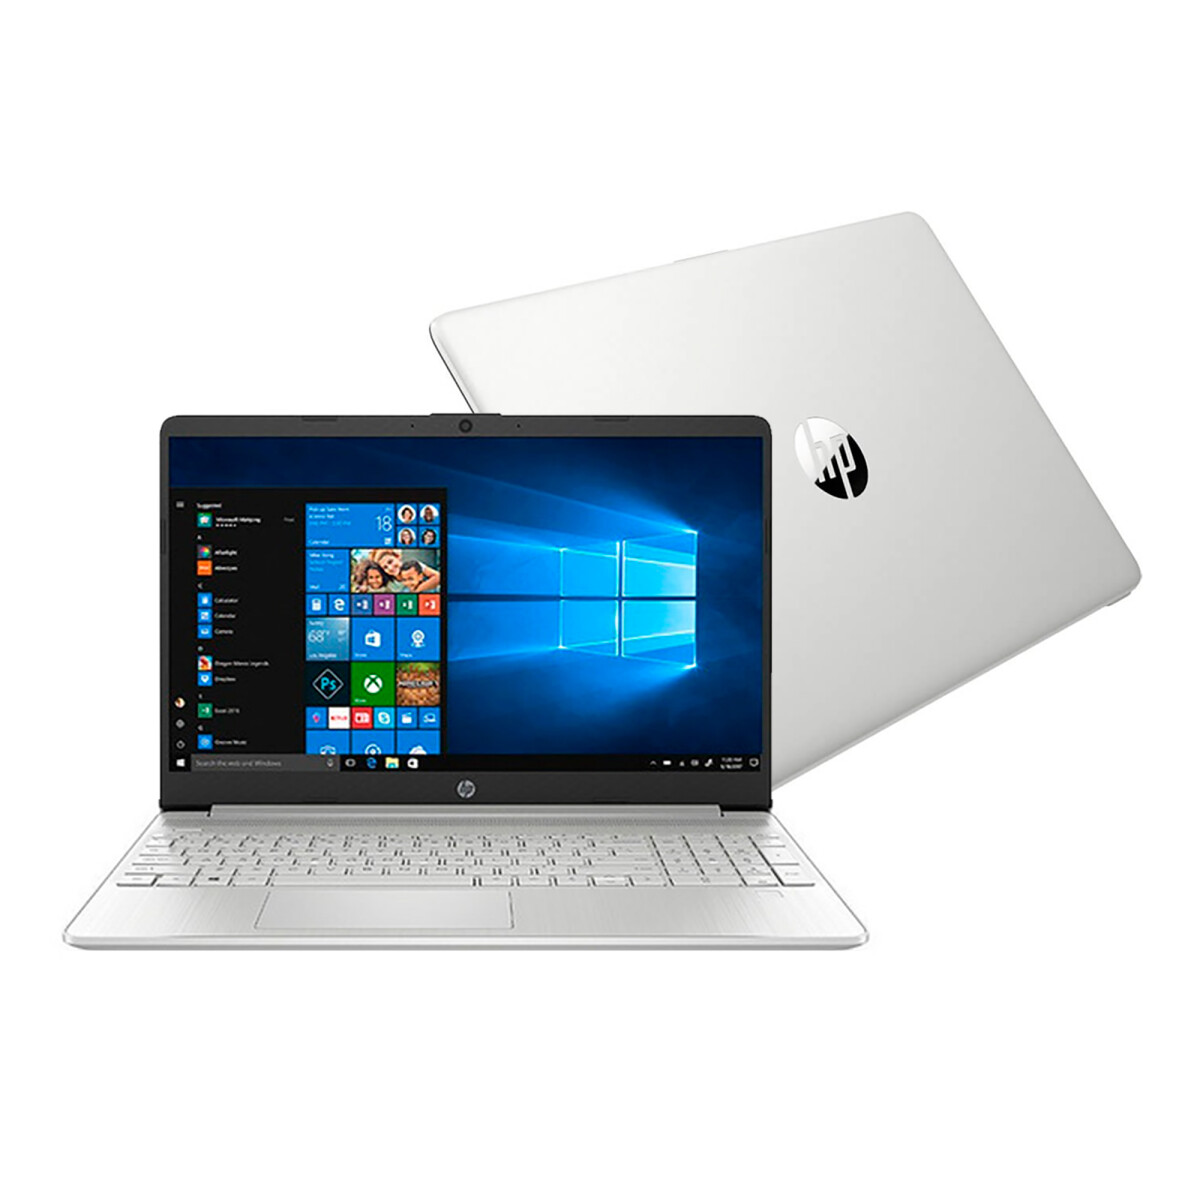 HP - Notebook 15-DY1032WM - 15,6" Led. Intel Core I3-1005G1. Intel Uhd. Windows. Ram 8GB / Ssd 256GB - 001 